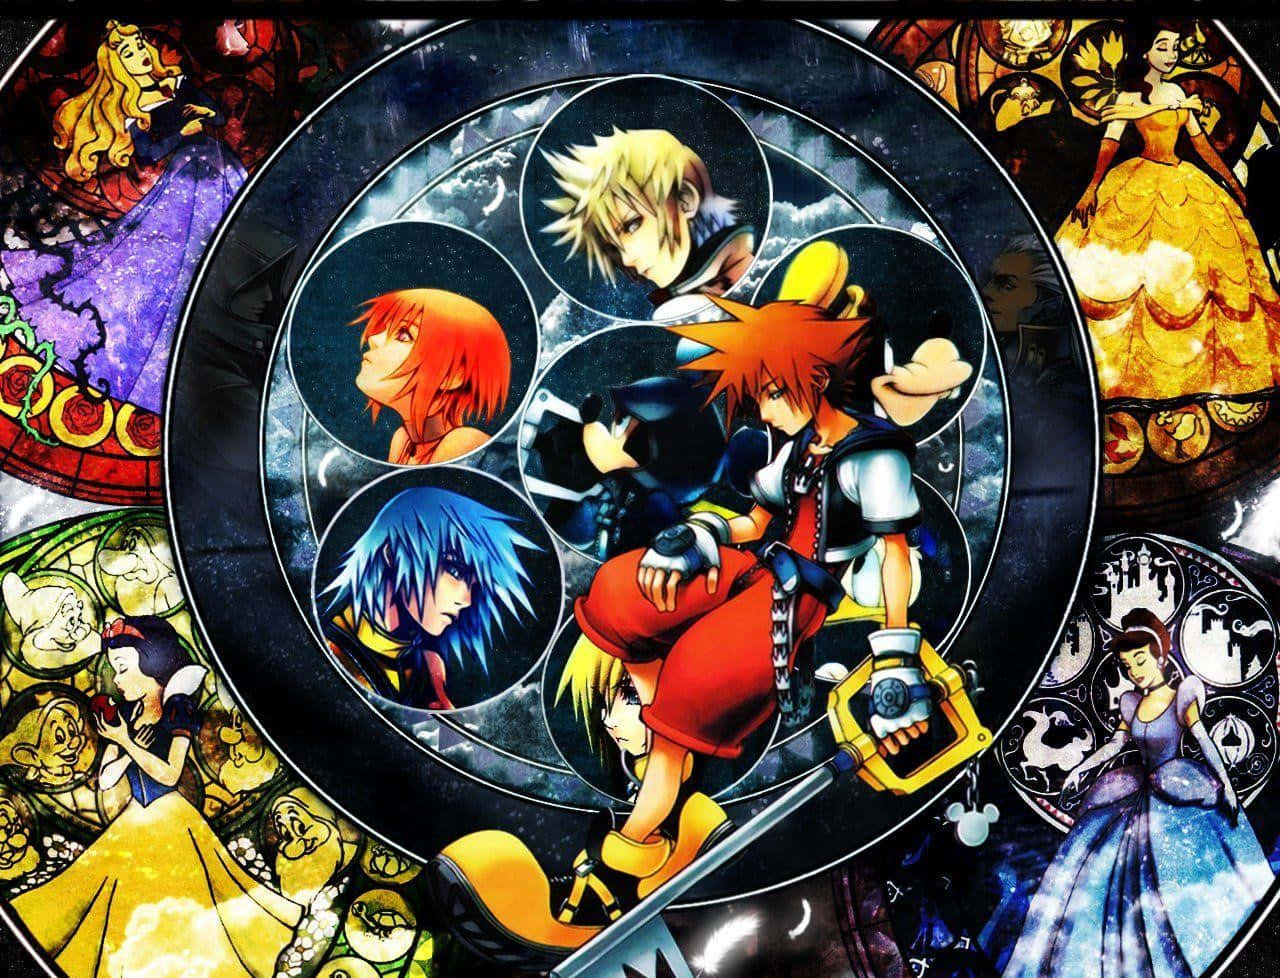 Riku - The keyblade master in Kingdom Hearts Wallpaper